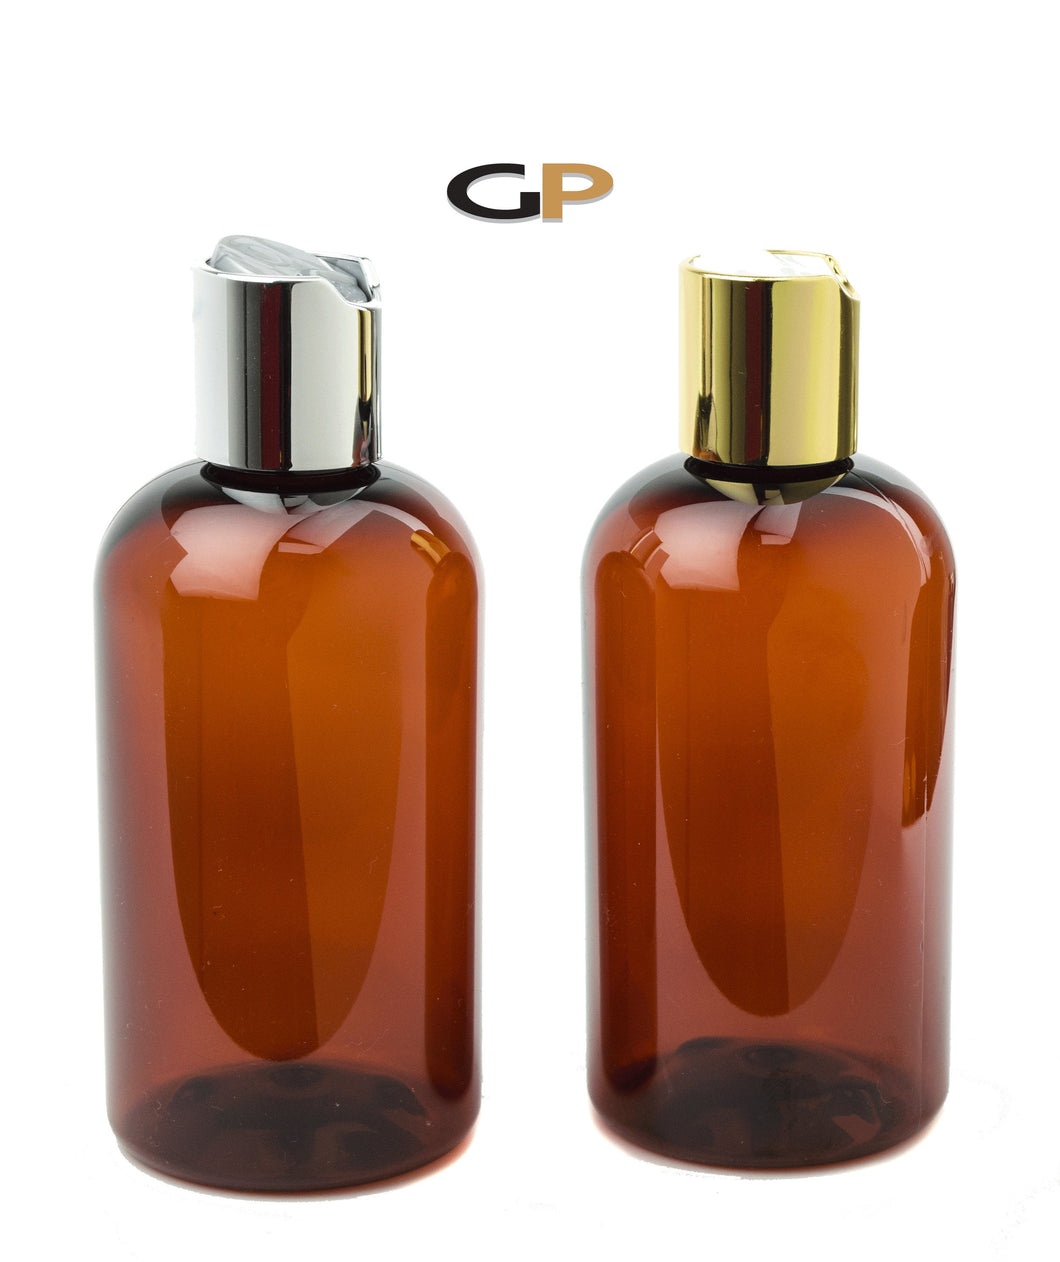 3 PREMIUM Amber 8 Oz Soap/Hand Cream, Shampoo/Conditioner Shiny 240ml MODERN PET Boston Round Plastic Bottles w/ Gold Disc Cap Dispenser